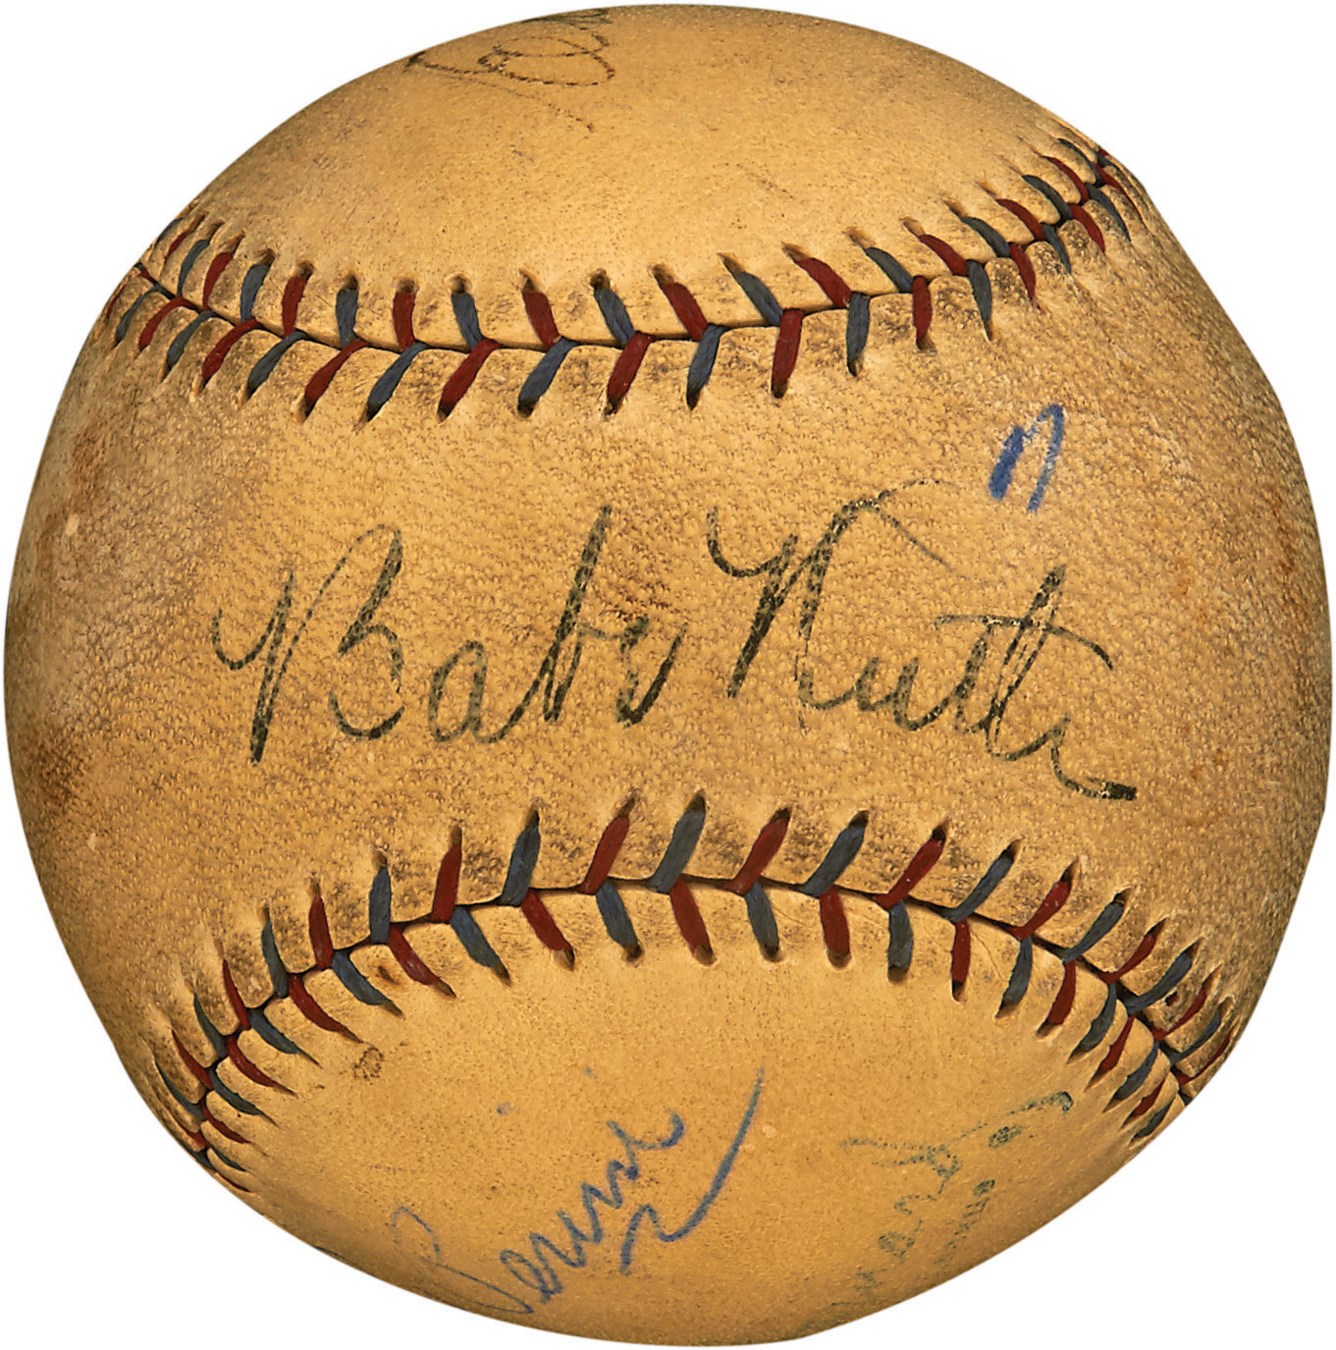 Baseball Autographs - Babe Ruth & Lou Gehrig Multi-Signed Baseball